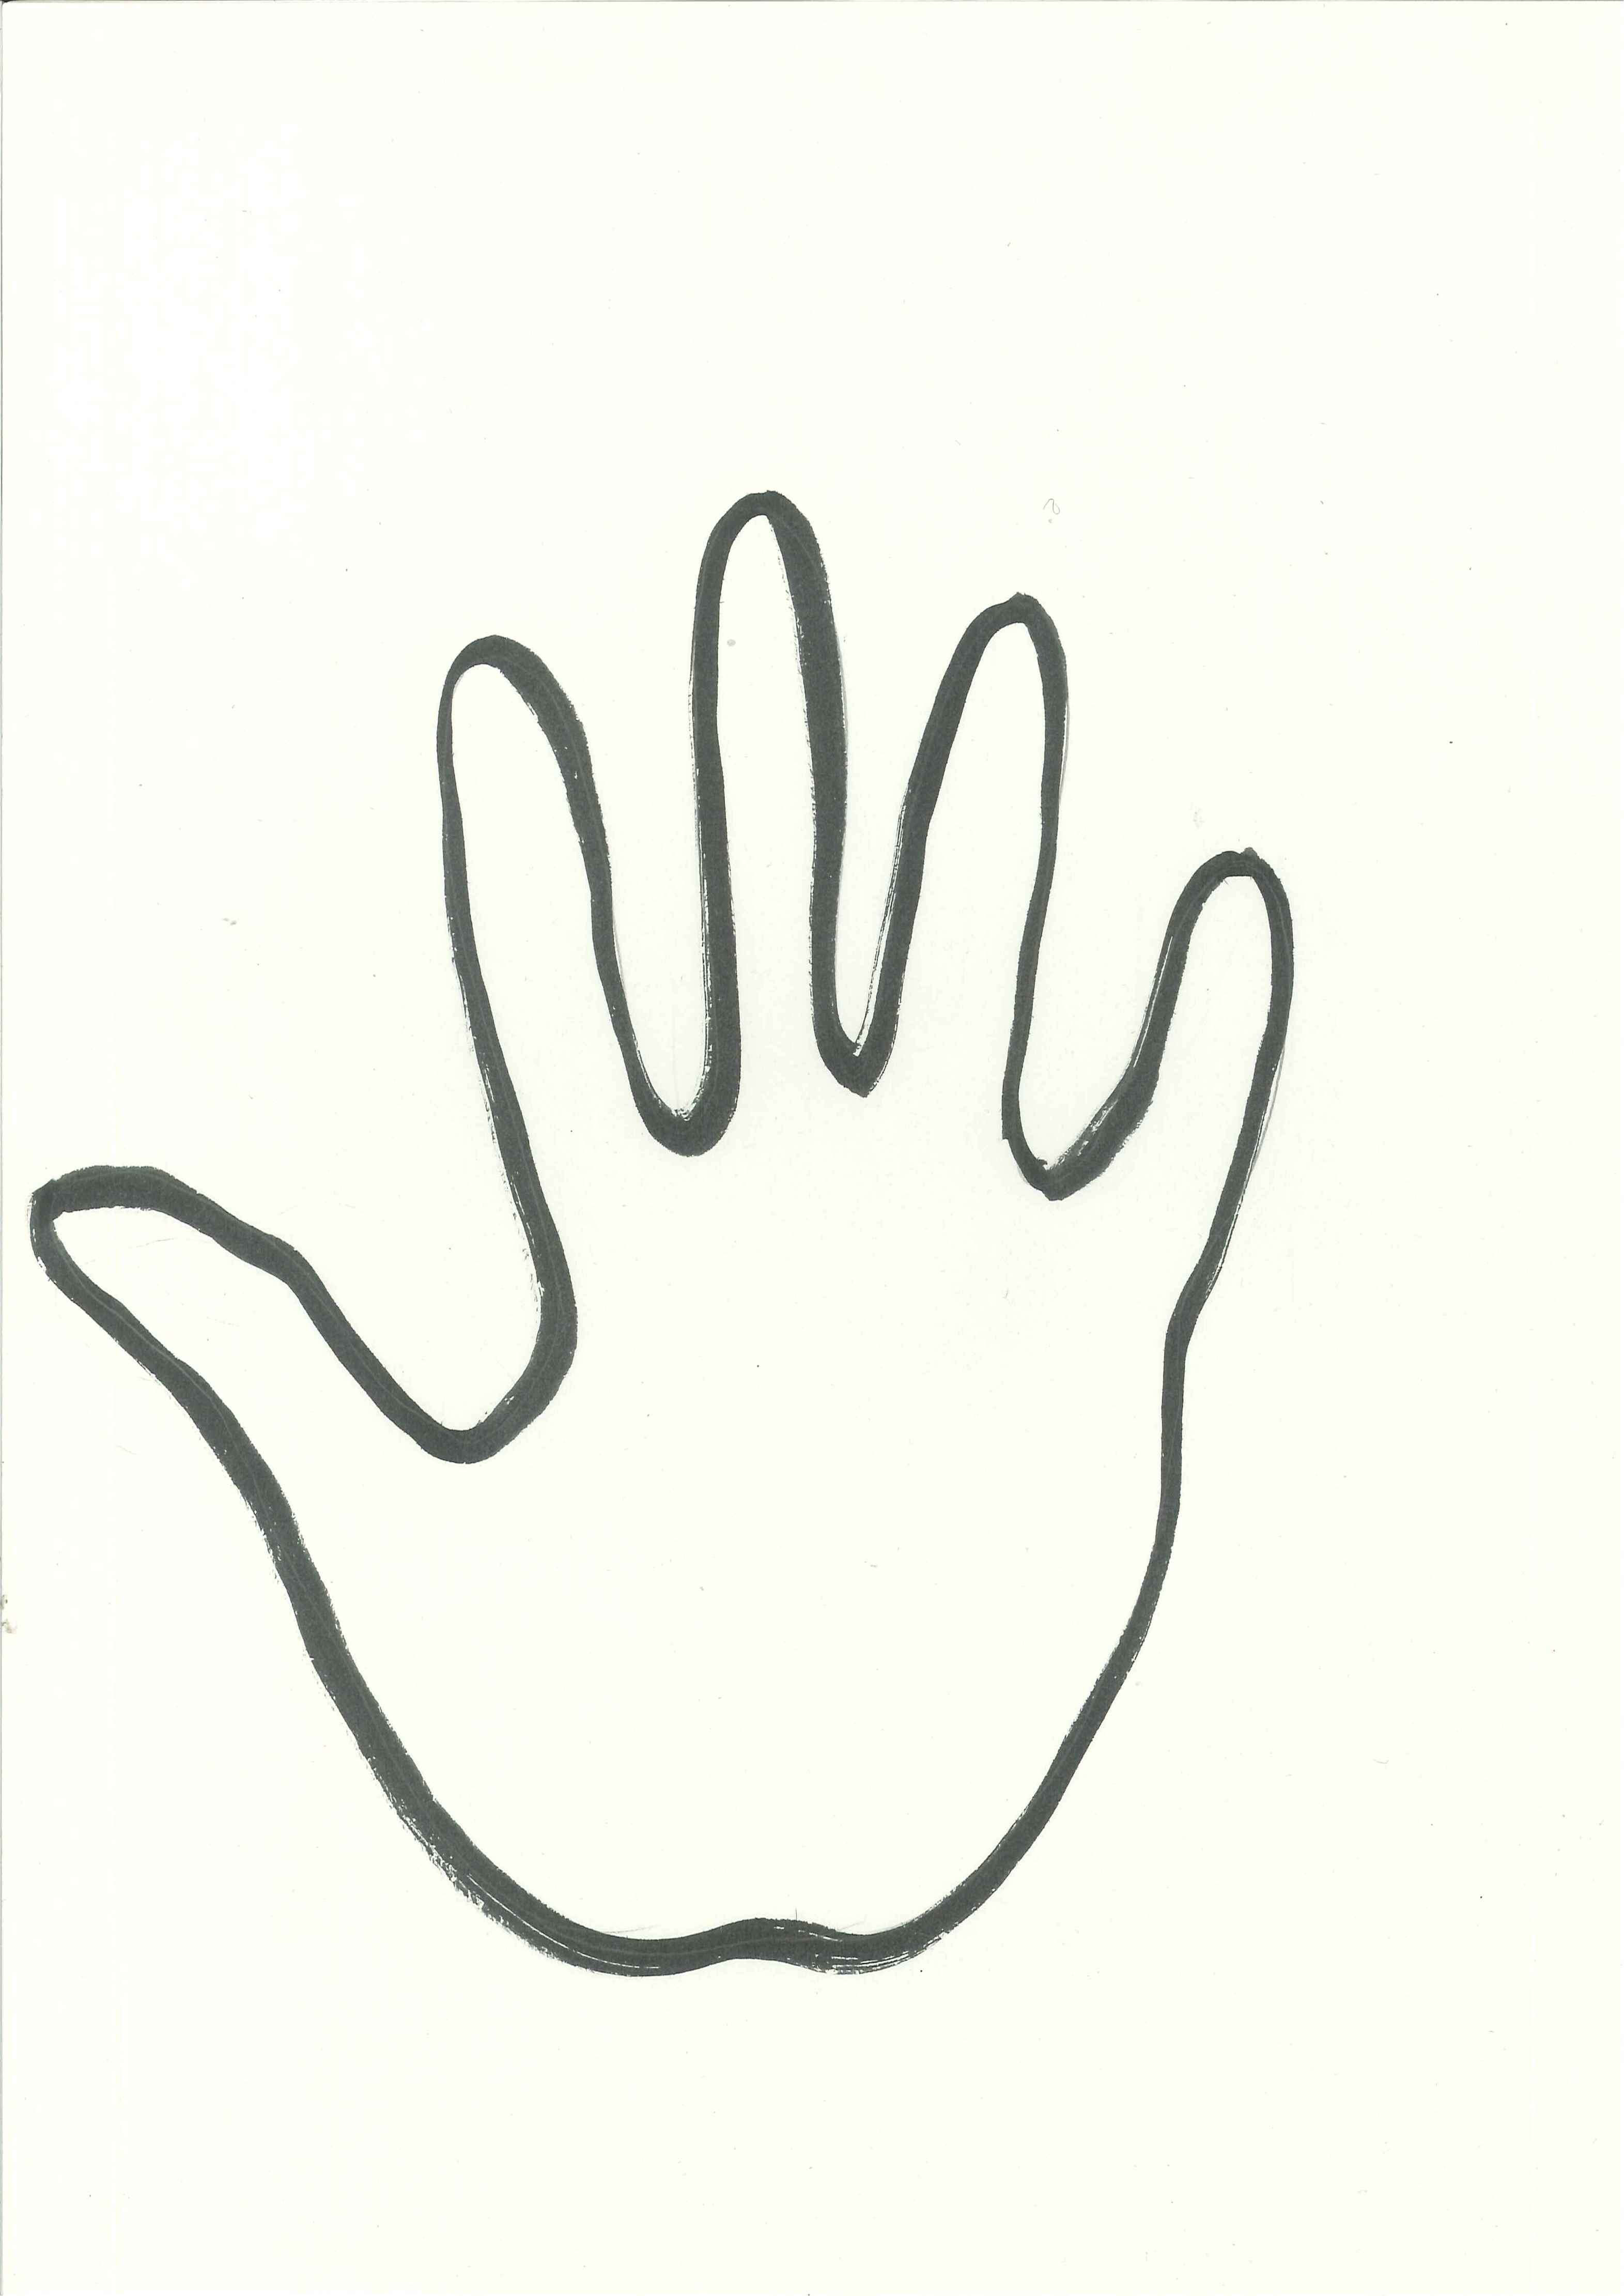 Hands hand outline